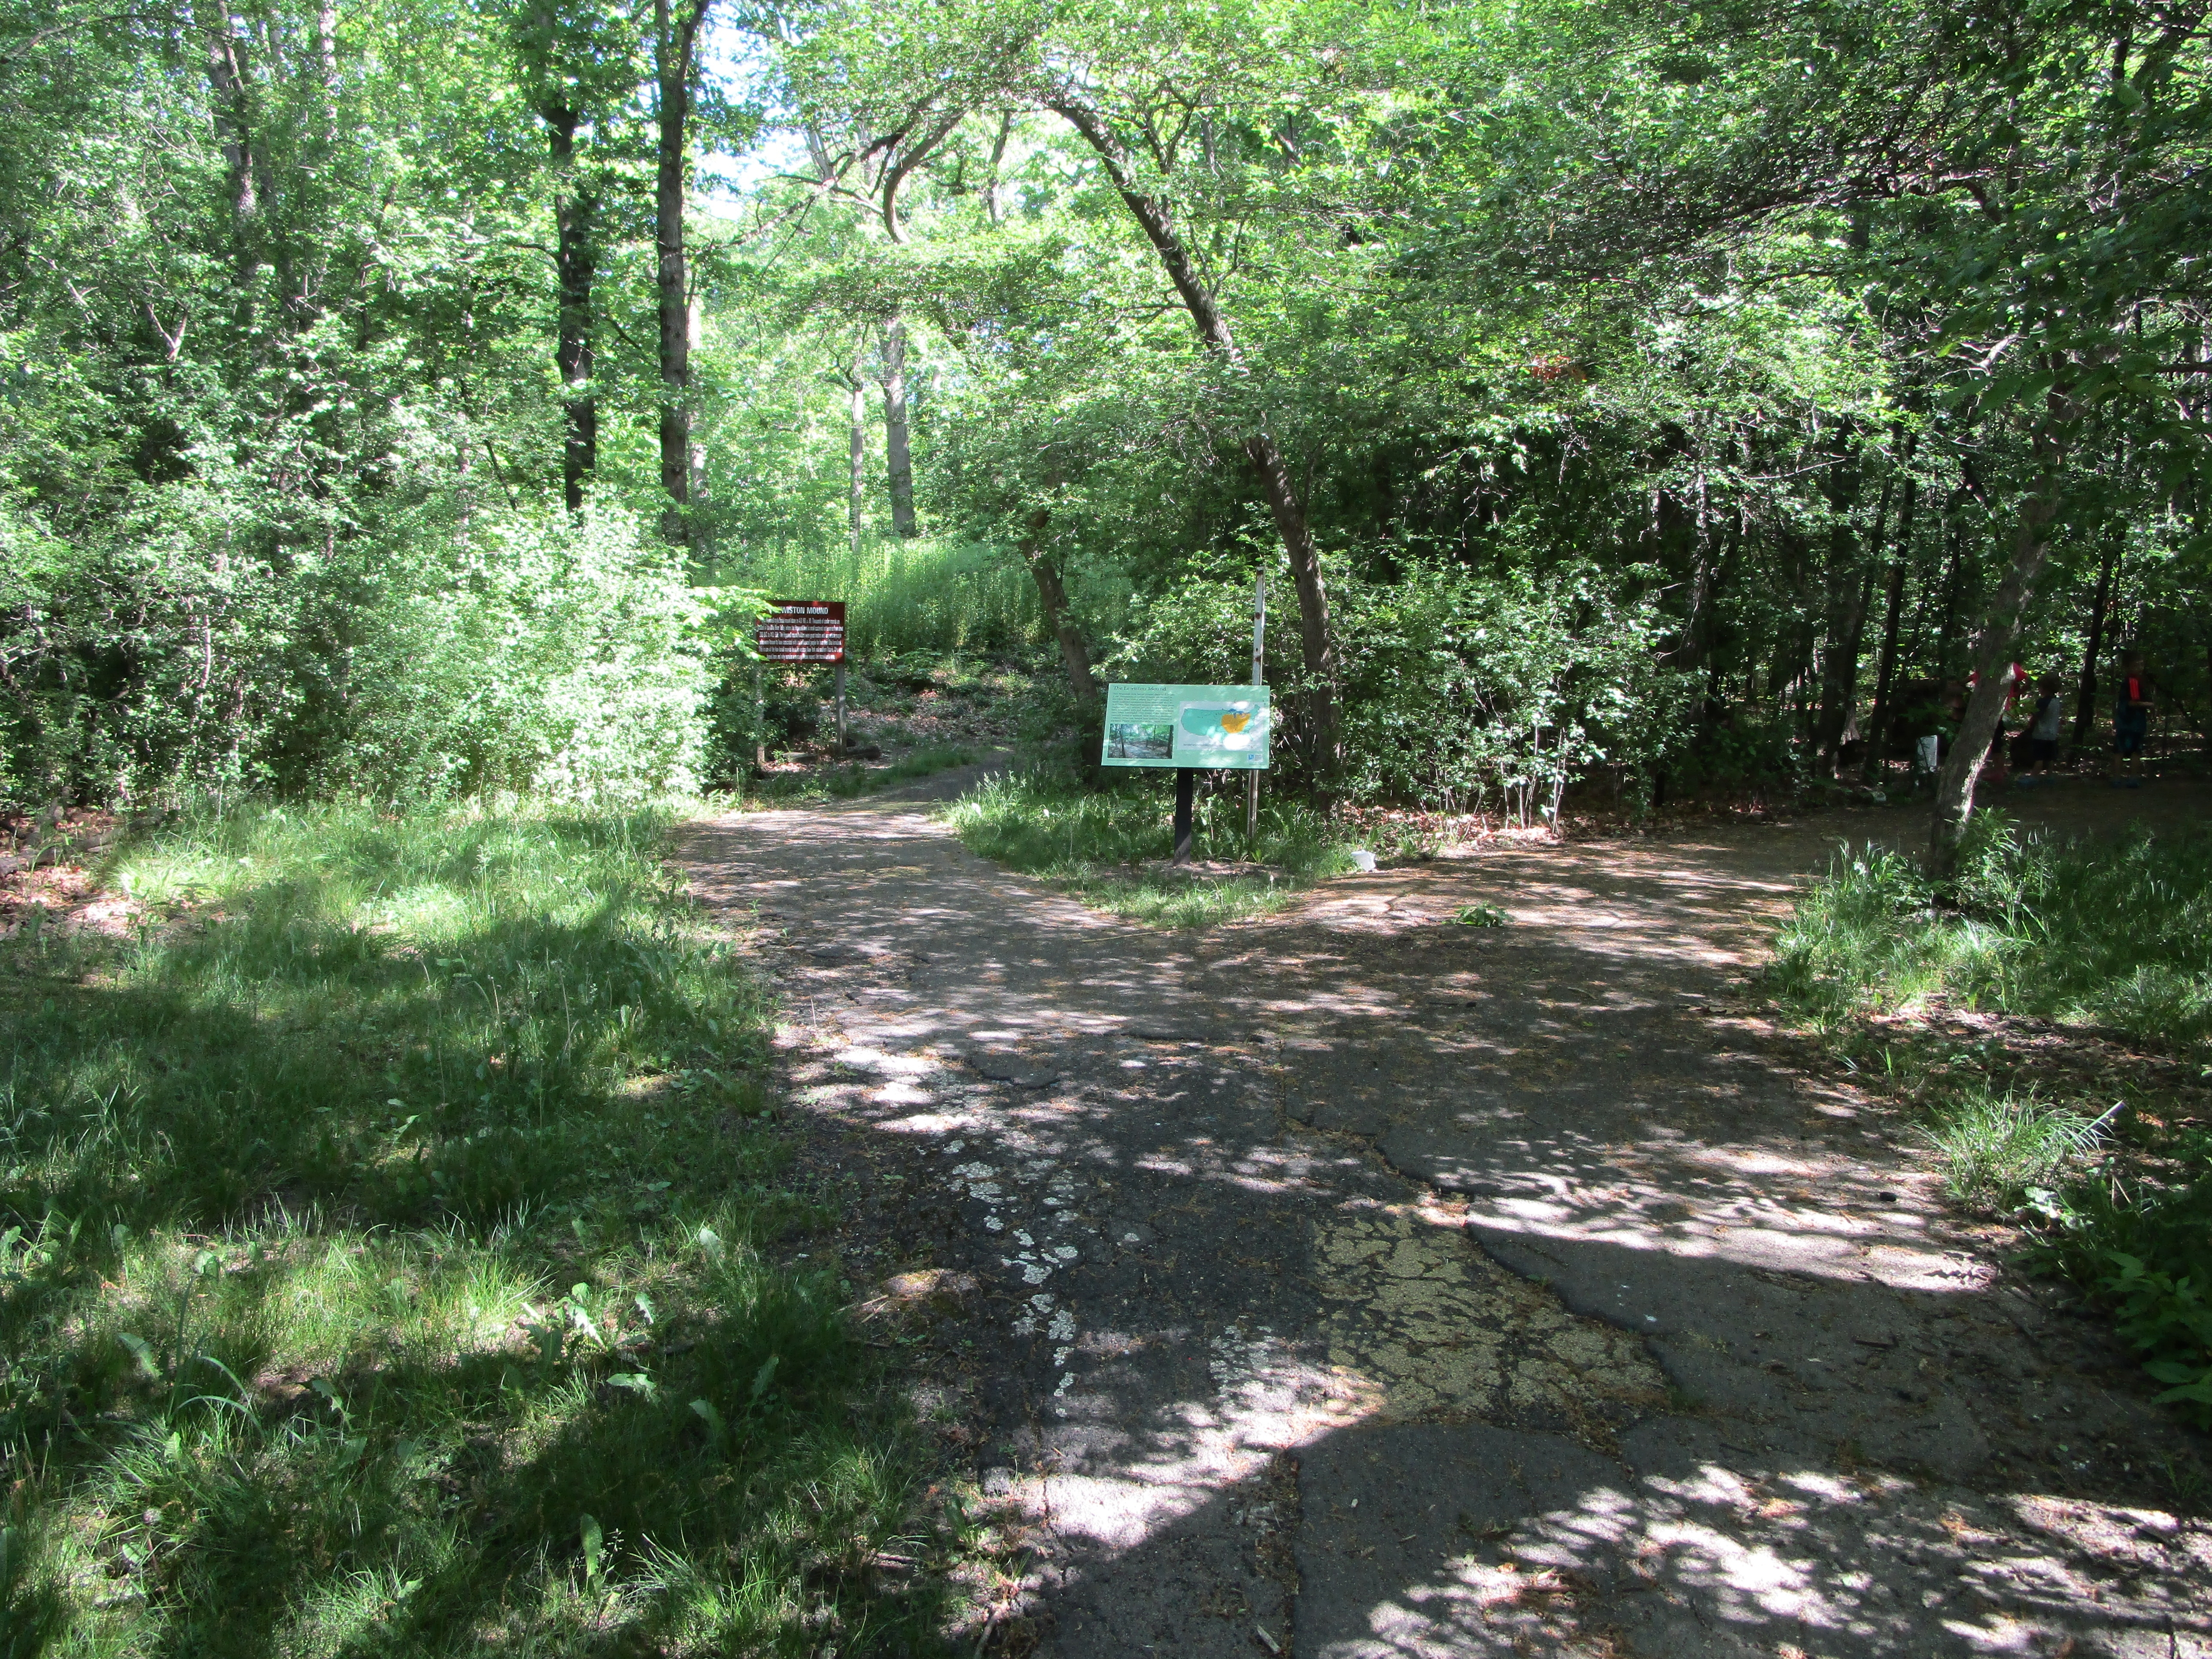 The Lewiston Mound Marker